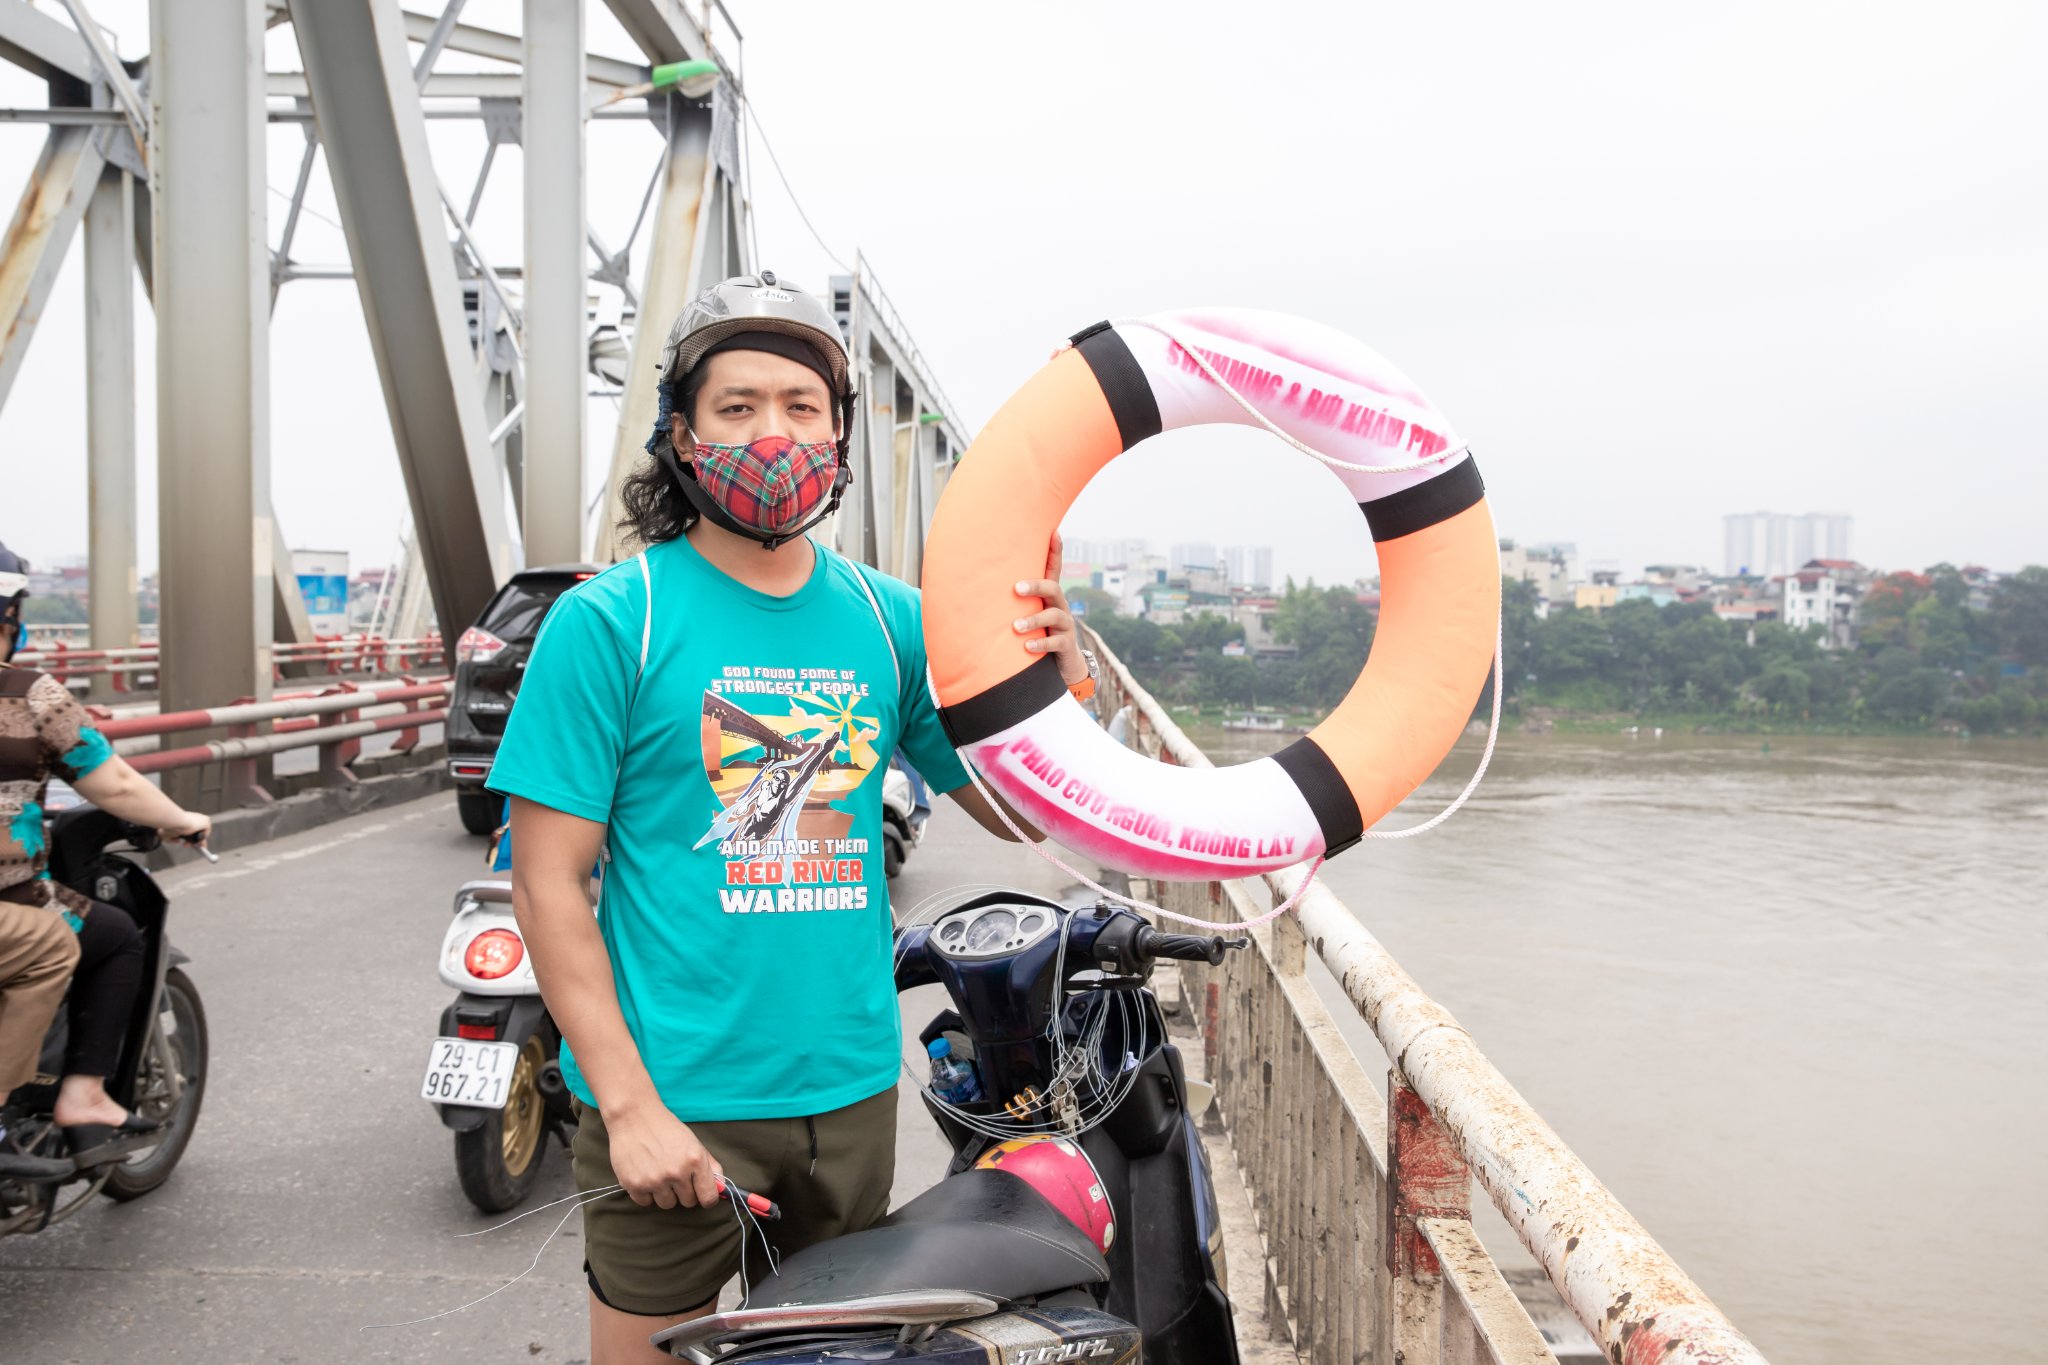 Lifebuoys stolen days after volunteers installed them on bridges in Hanoi